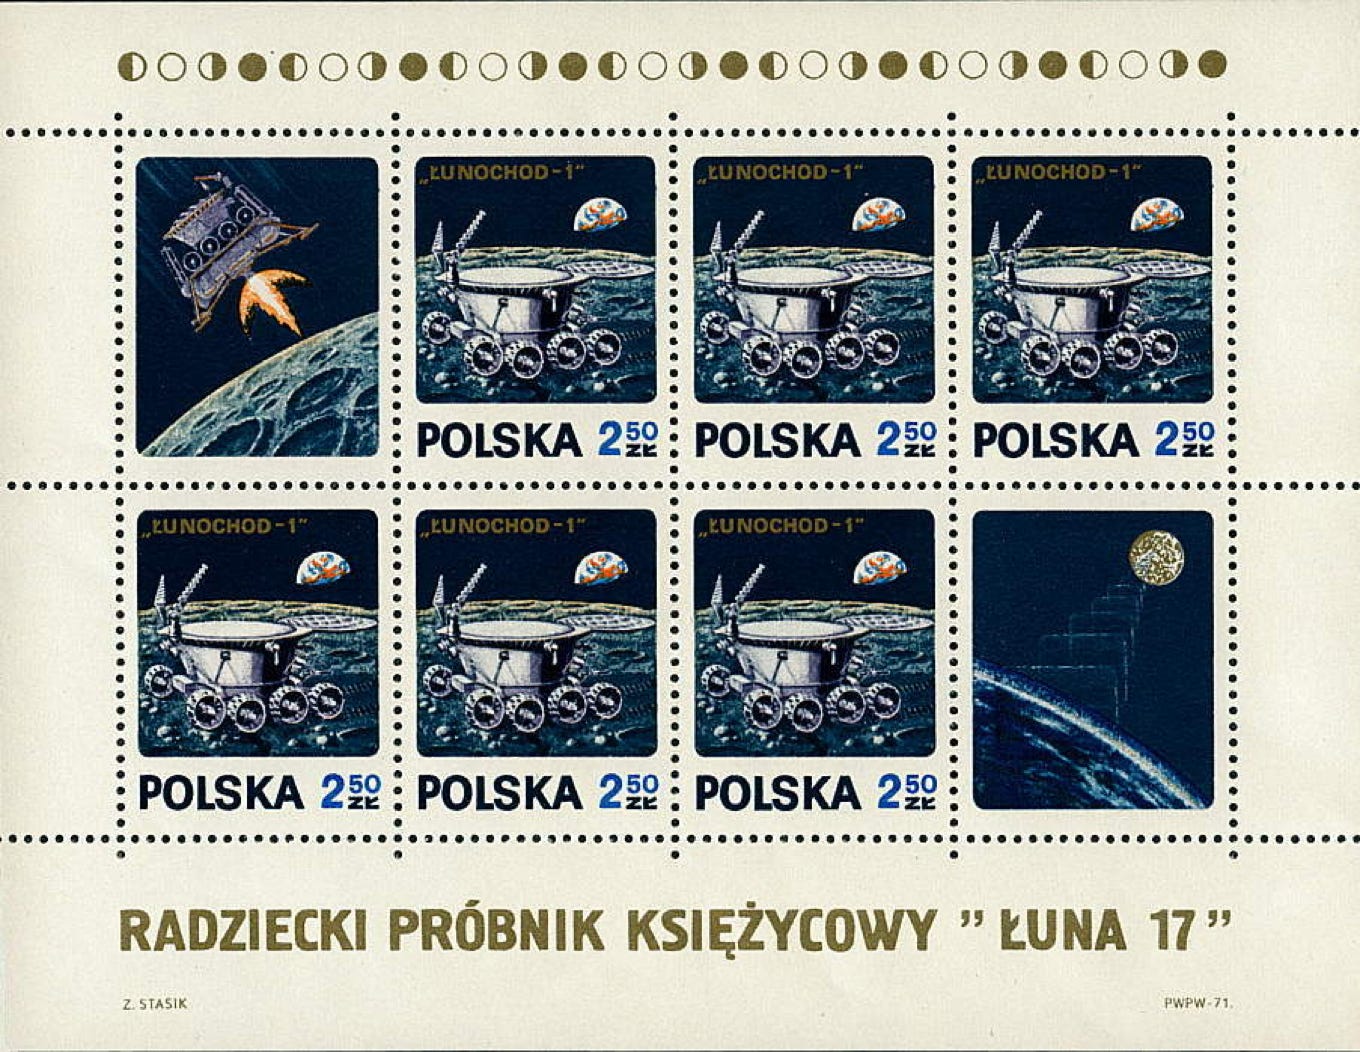 Poland 1971 Lunokhod 1 stamp sheet